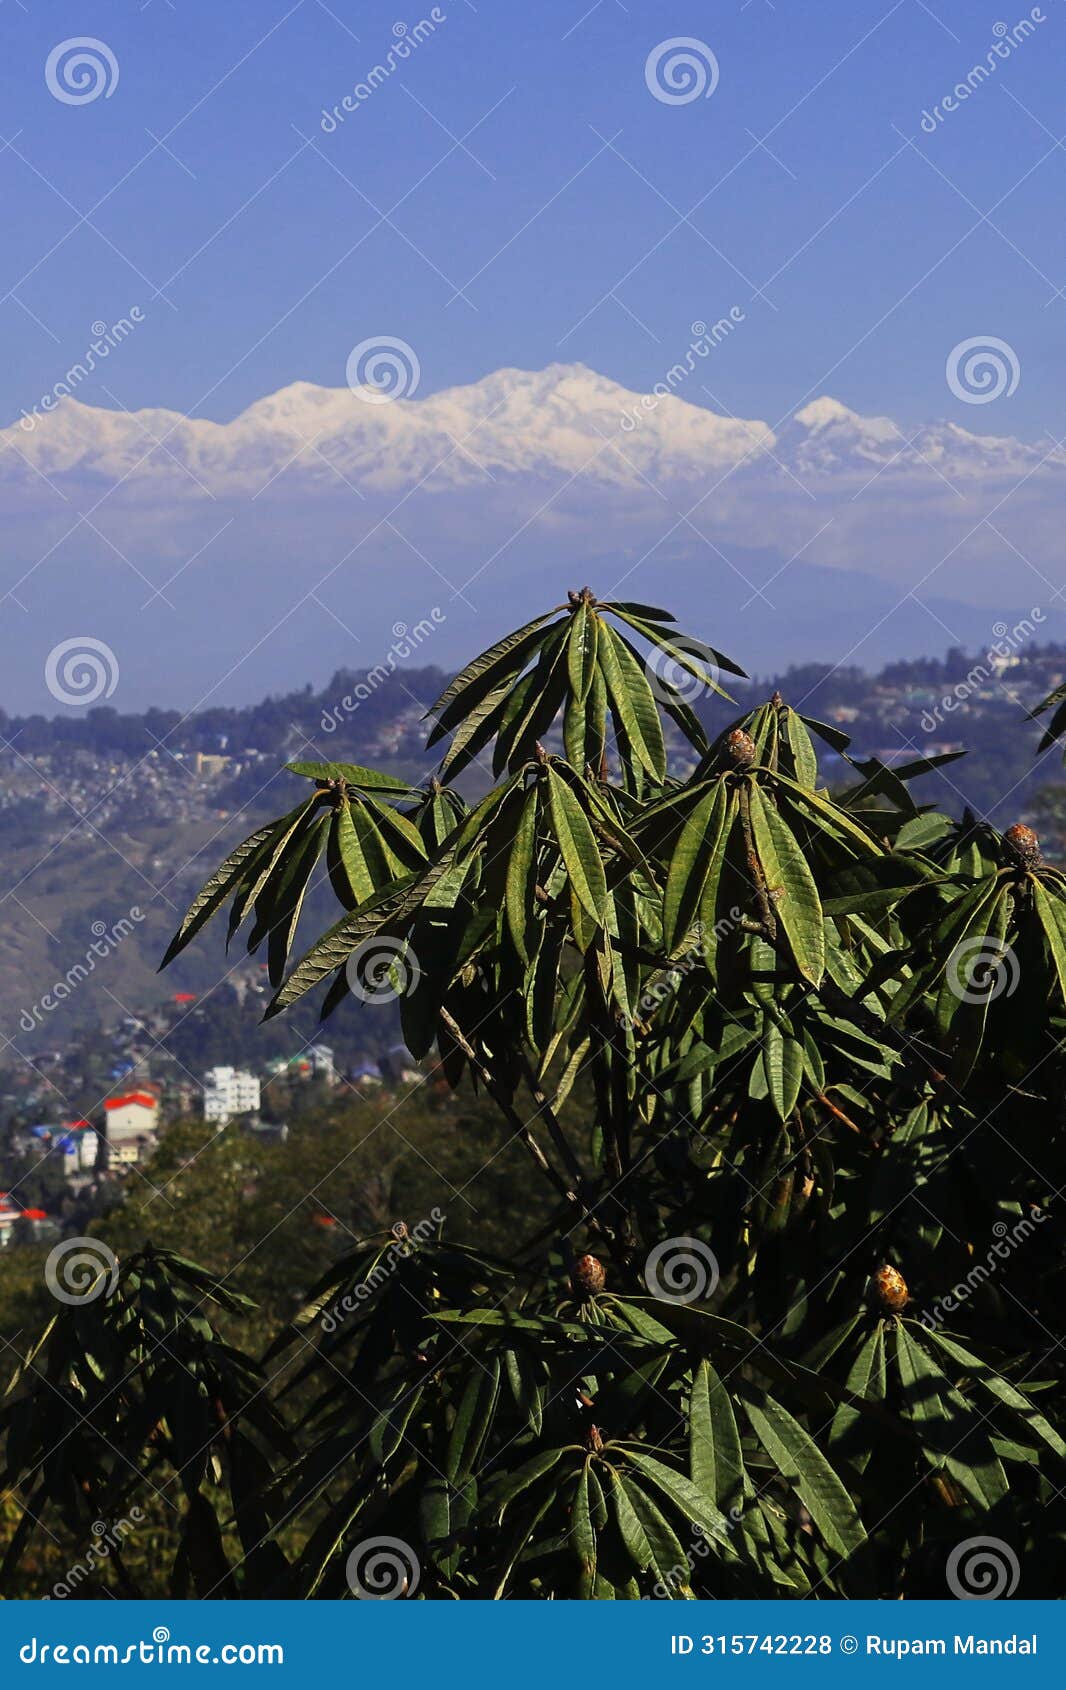 panorama of beautiful darjeeling hill station and snowcapped mount kangchenjunga